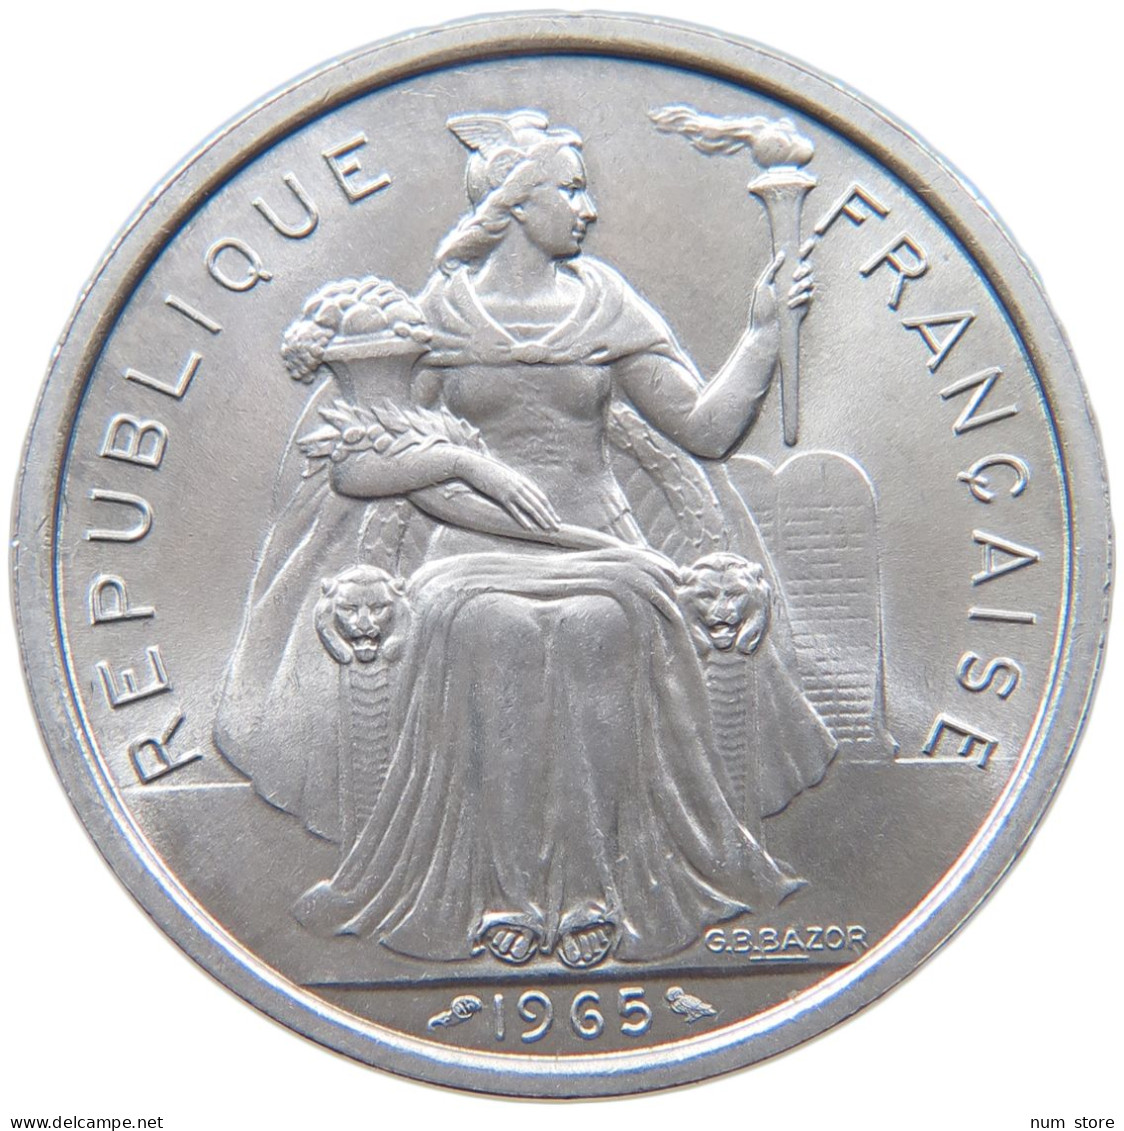 FRENCH POLYNESIA 5 FRANCS 1965 #s090 0005 - Polynésie Française